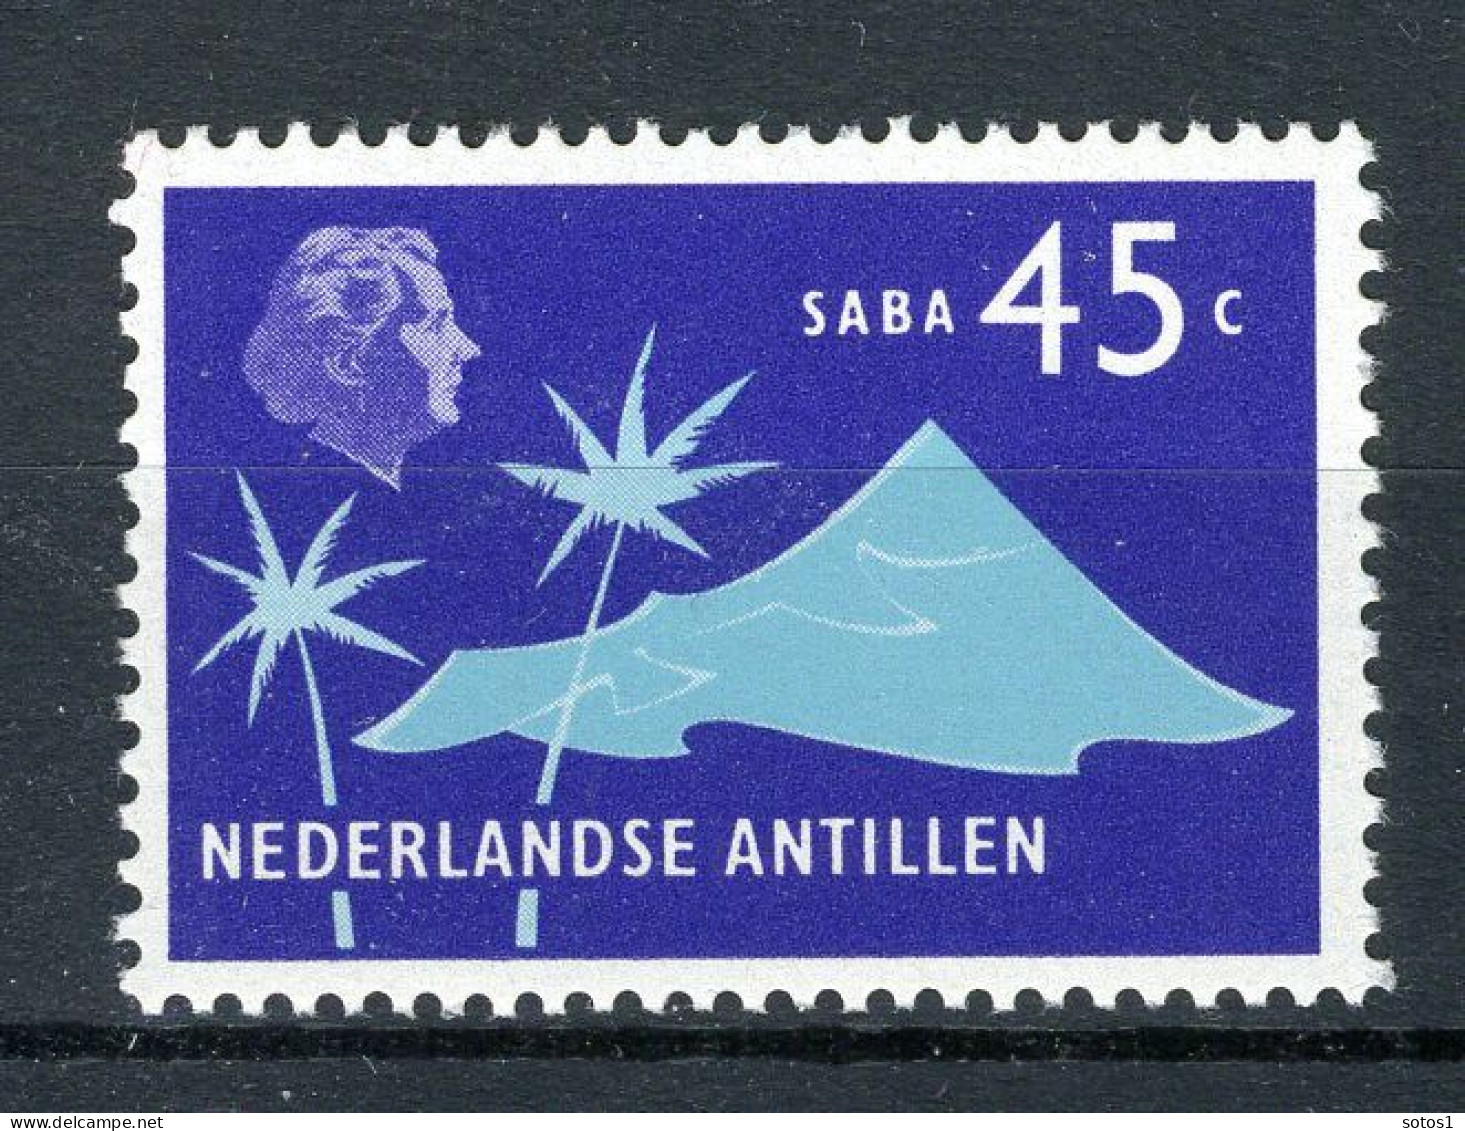 NL. ANTILLEN 460 MNH 1973 - Aanvullingswaarden, Koningin Juliana  - Curaçao, Antilles Neérlandaises, Aruba